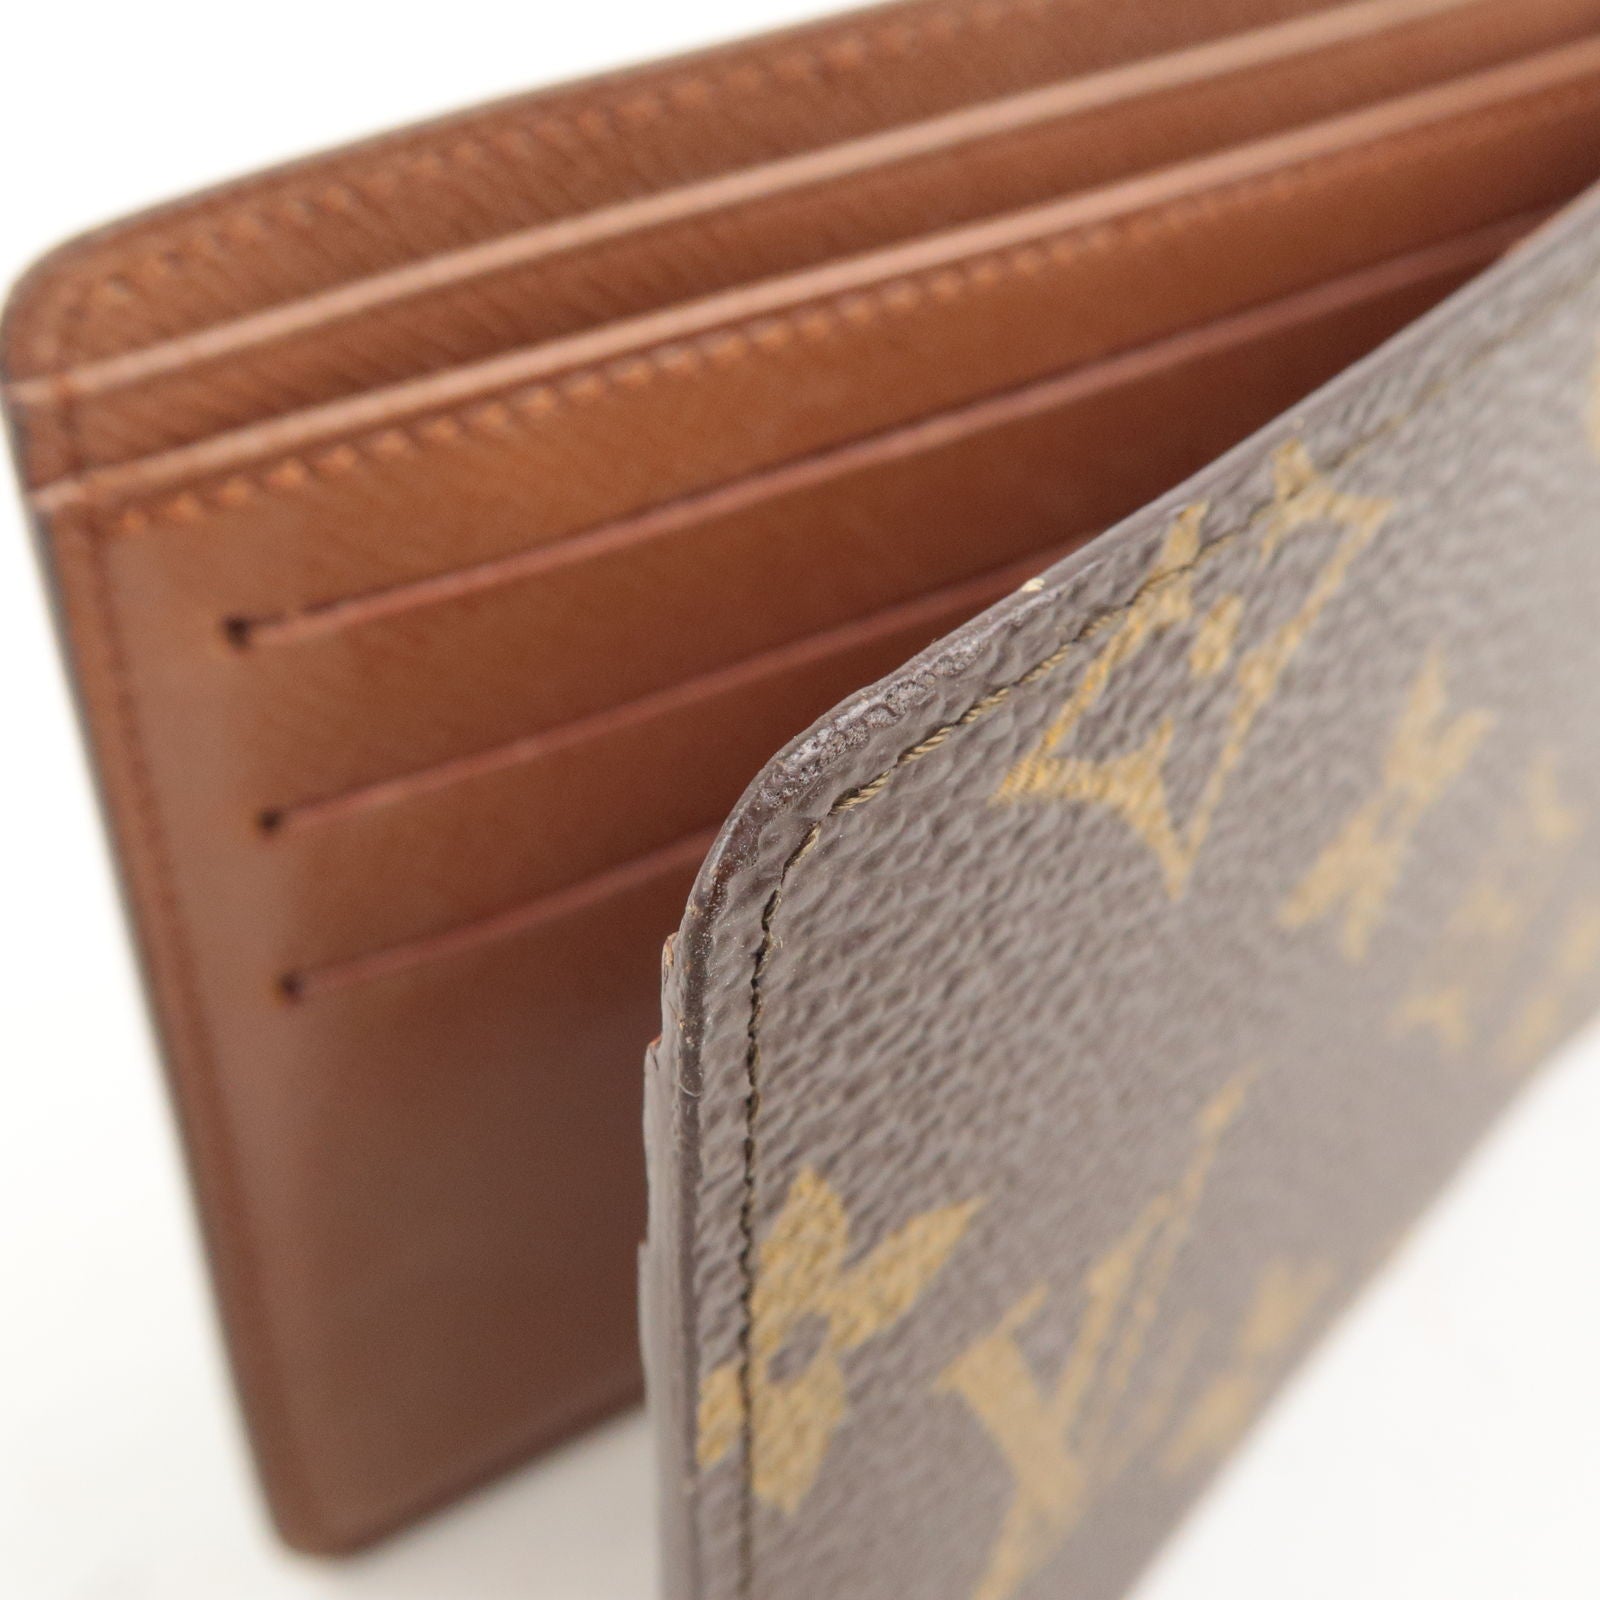 Louis Vuitton Marco Monogram Bi-Fold Wallet on SALE